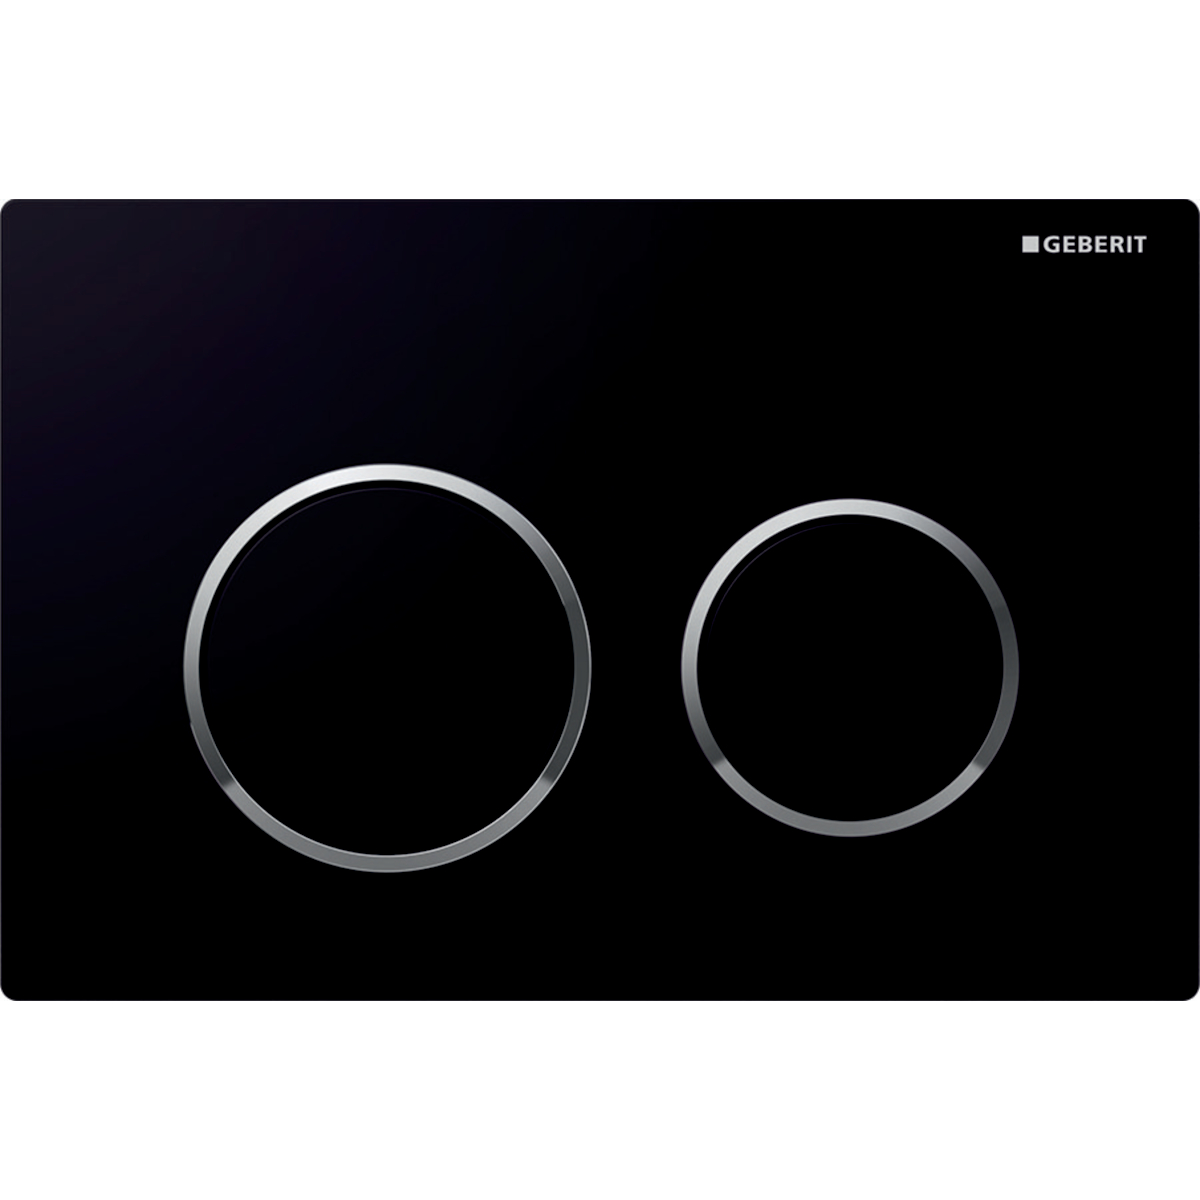 Geberit 115.085.KM.1 Actuator Plate Omega20 for Dual Flus - Black / Bright Chrome / Black